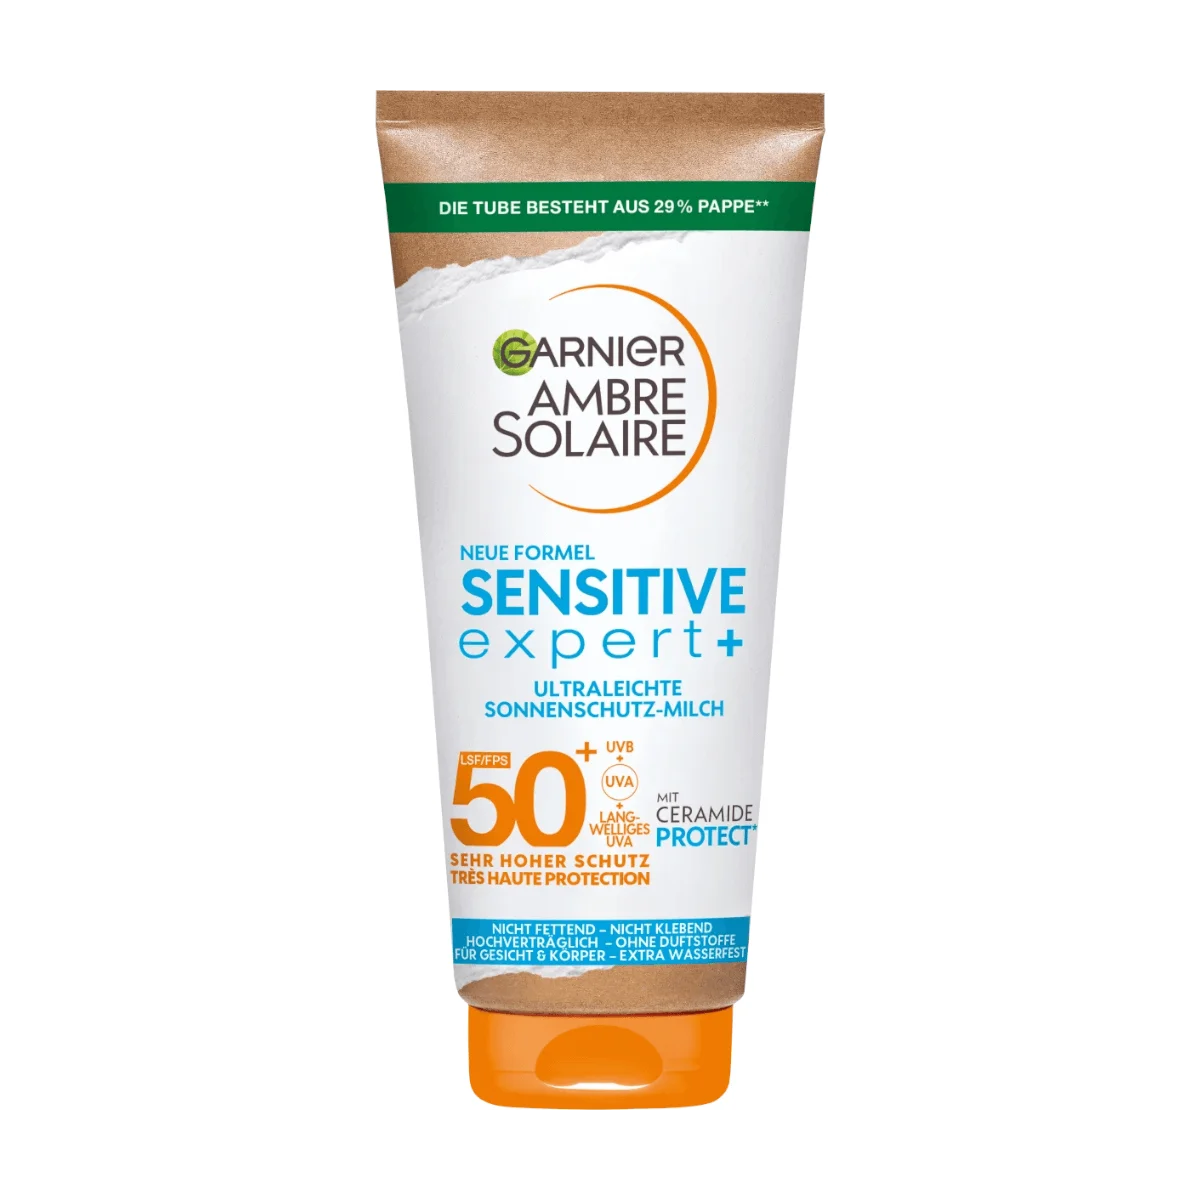 Garnier Ambre Solaire Sonnenmilch sensitive expert+, LSF 50+, 175 ml